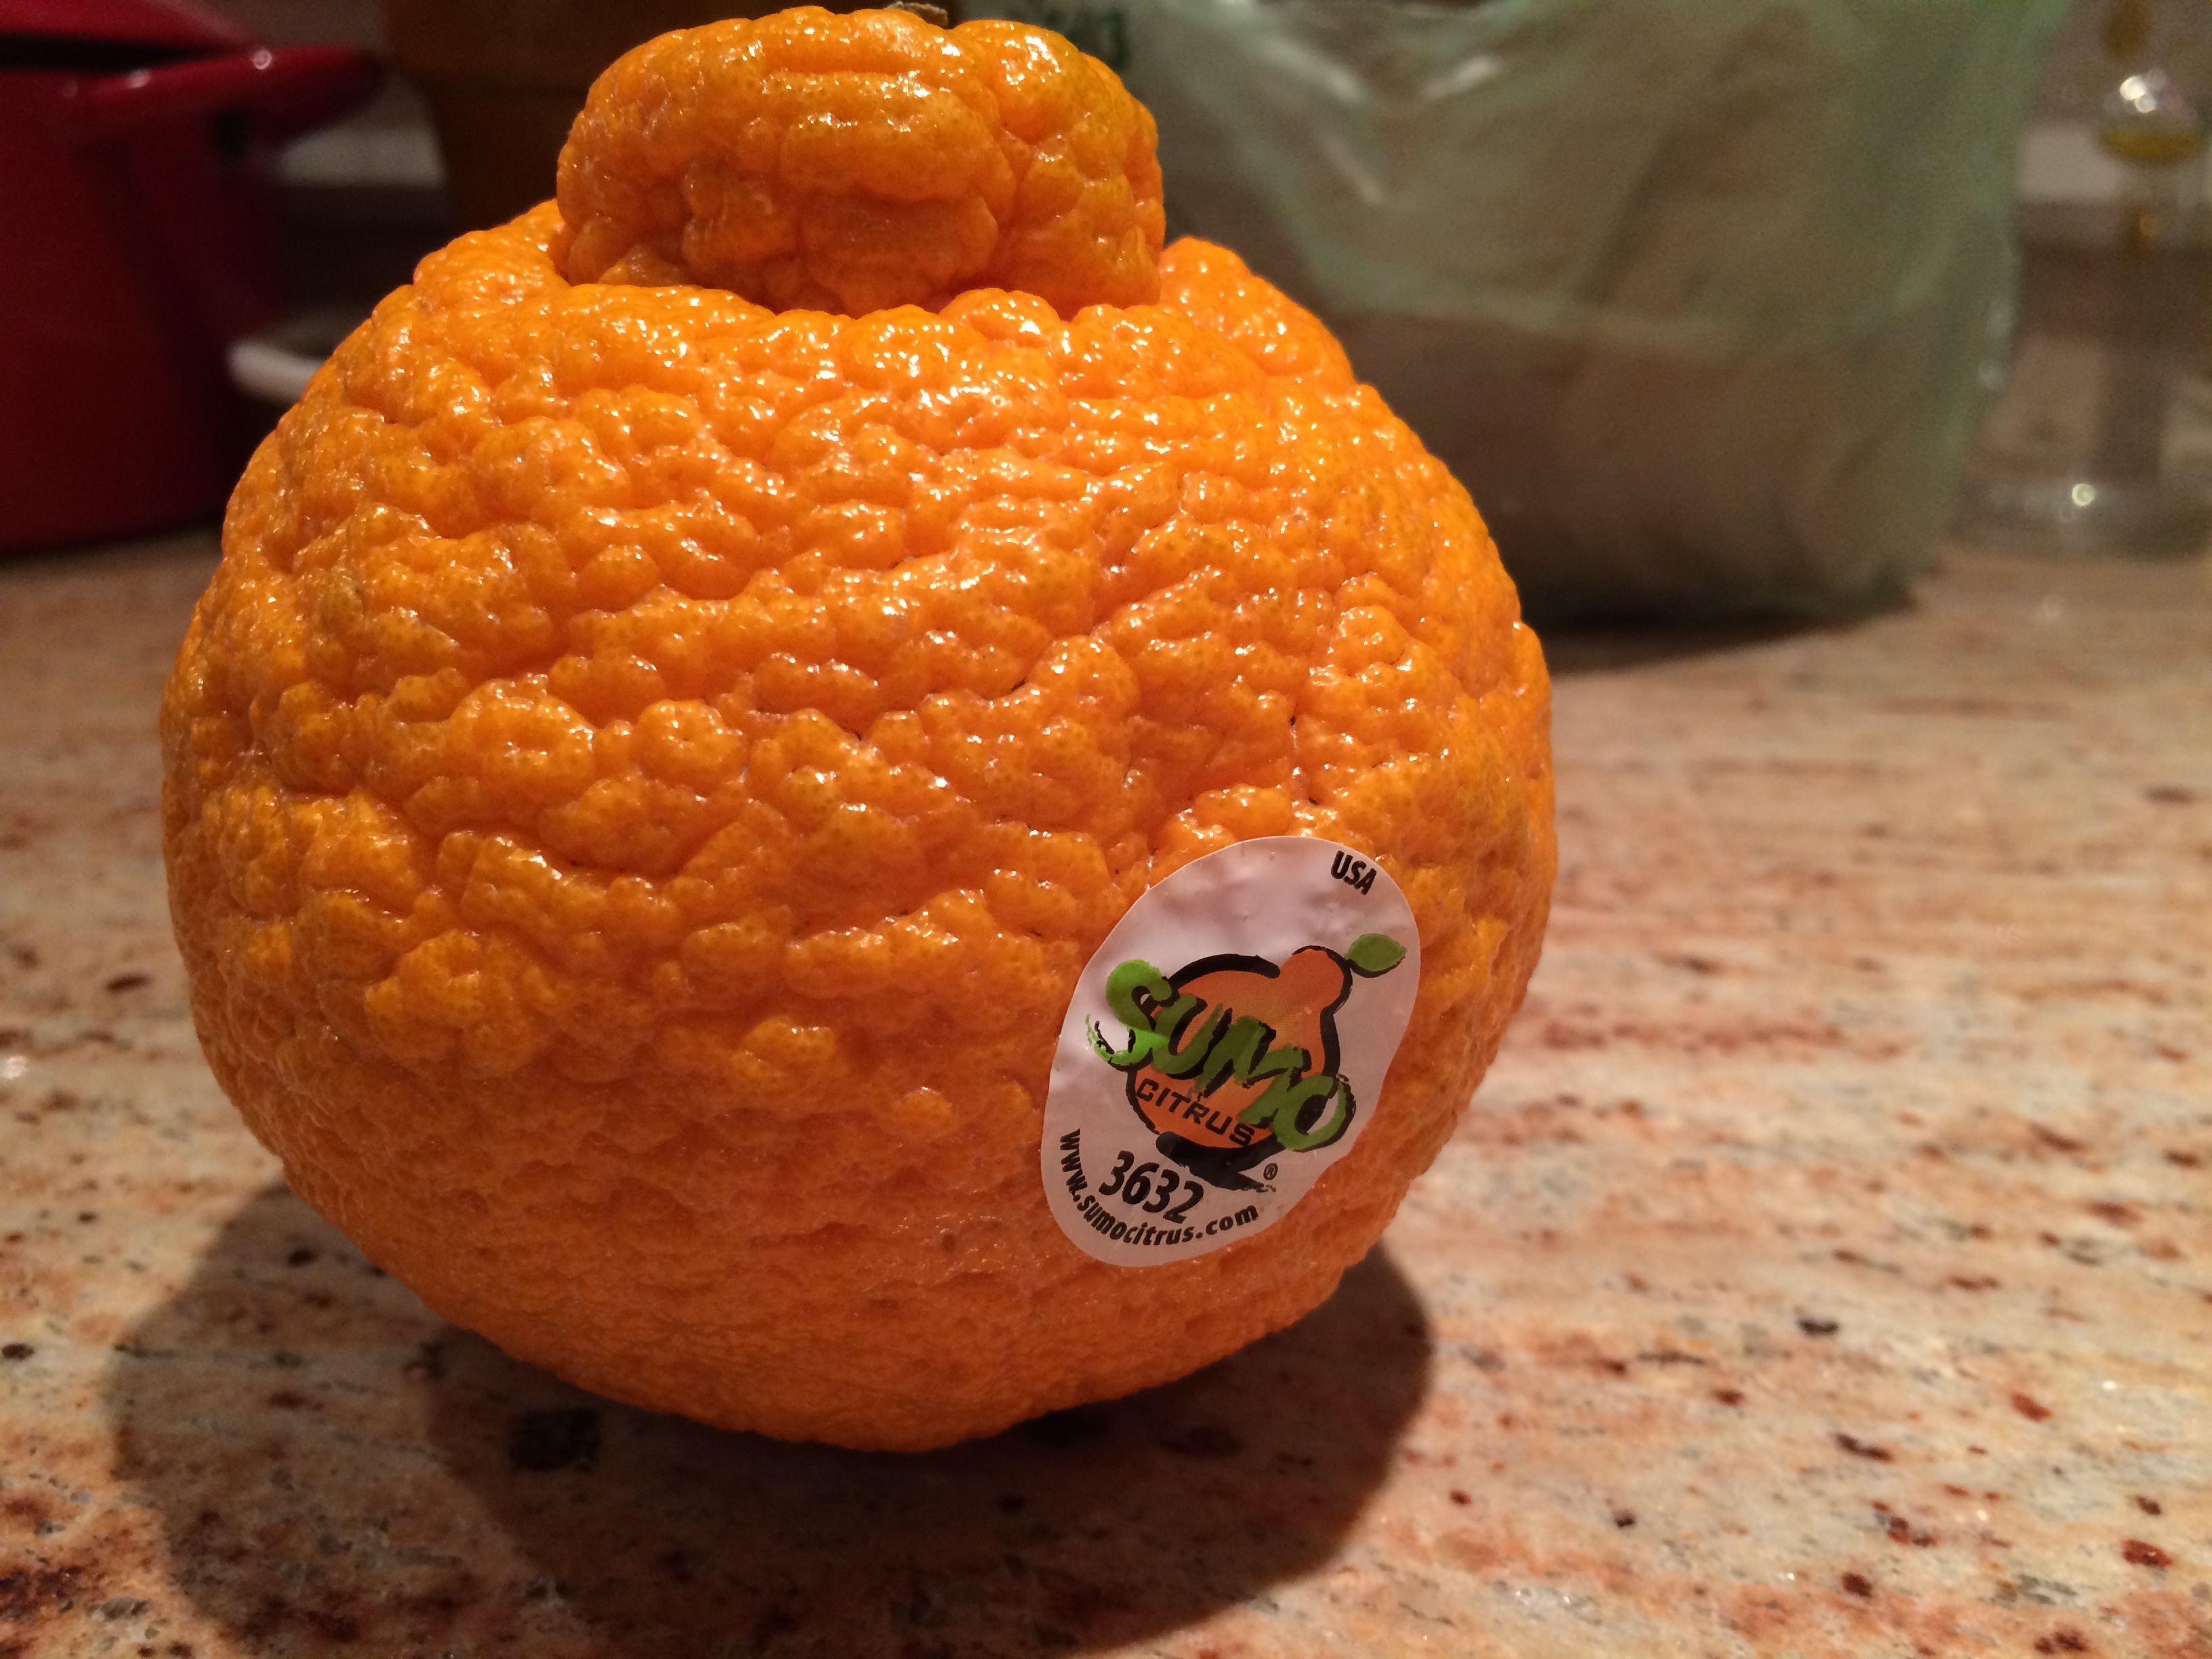 Sumo oranges for Valentine's Day — Steemit